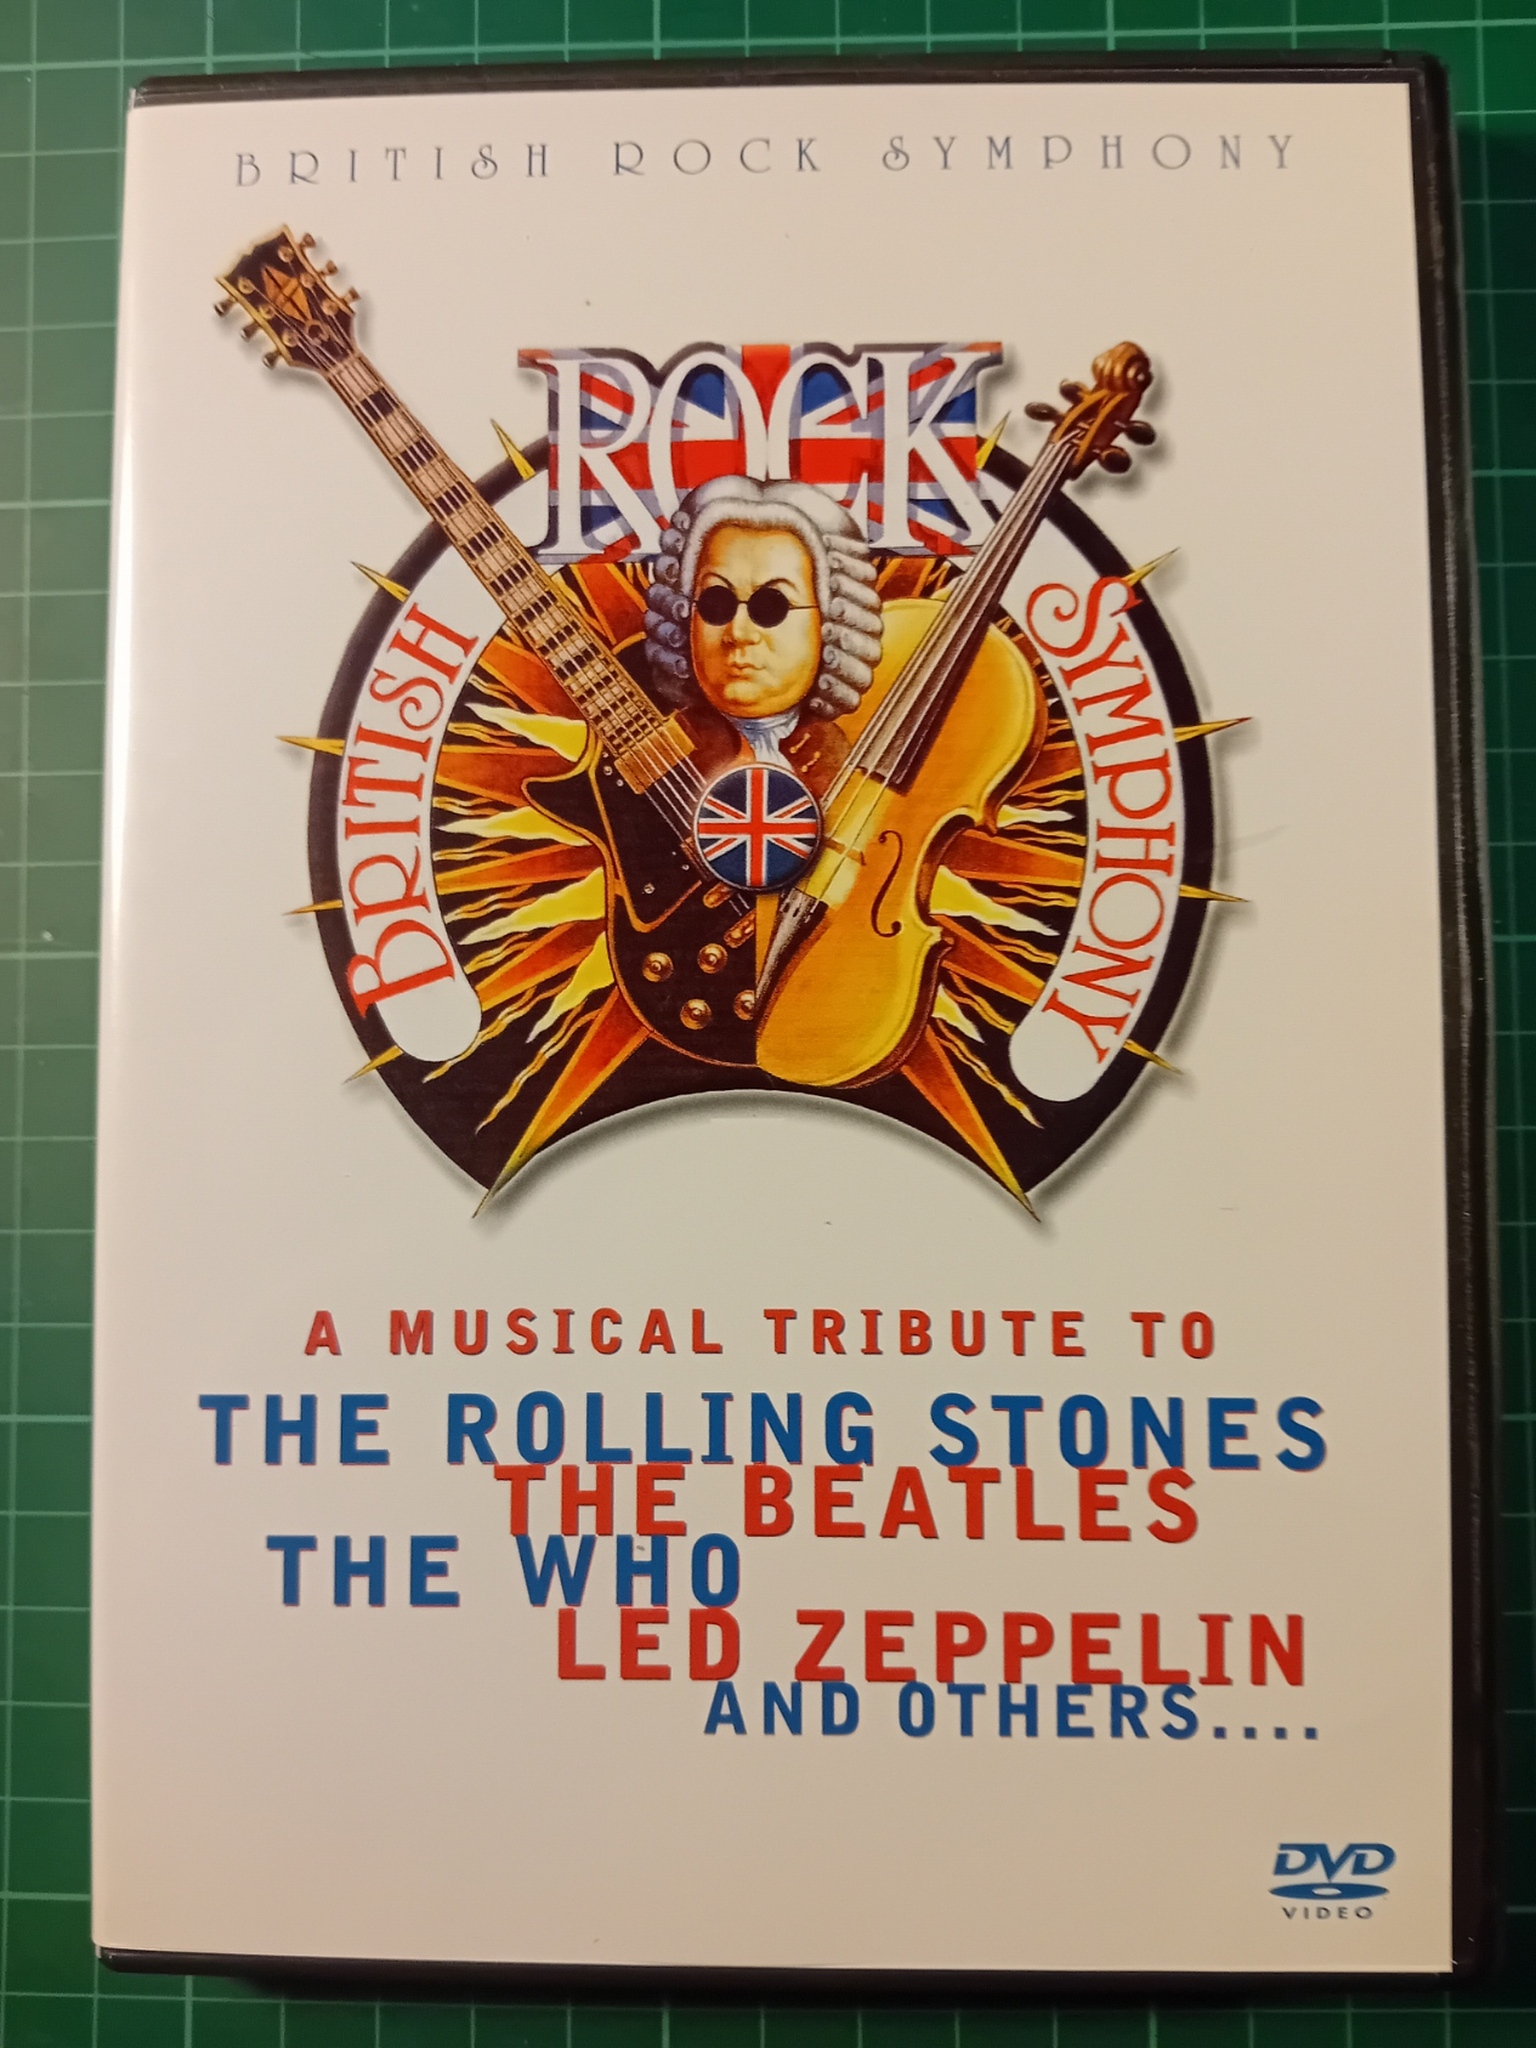 DVD : British rock symphony (konsert film)